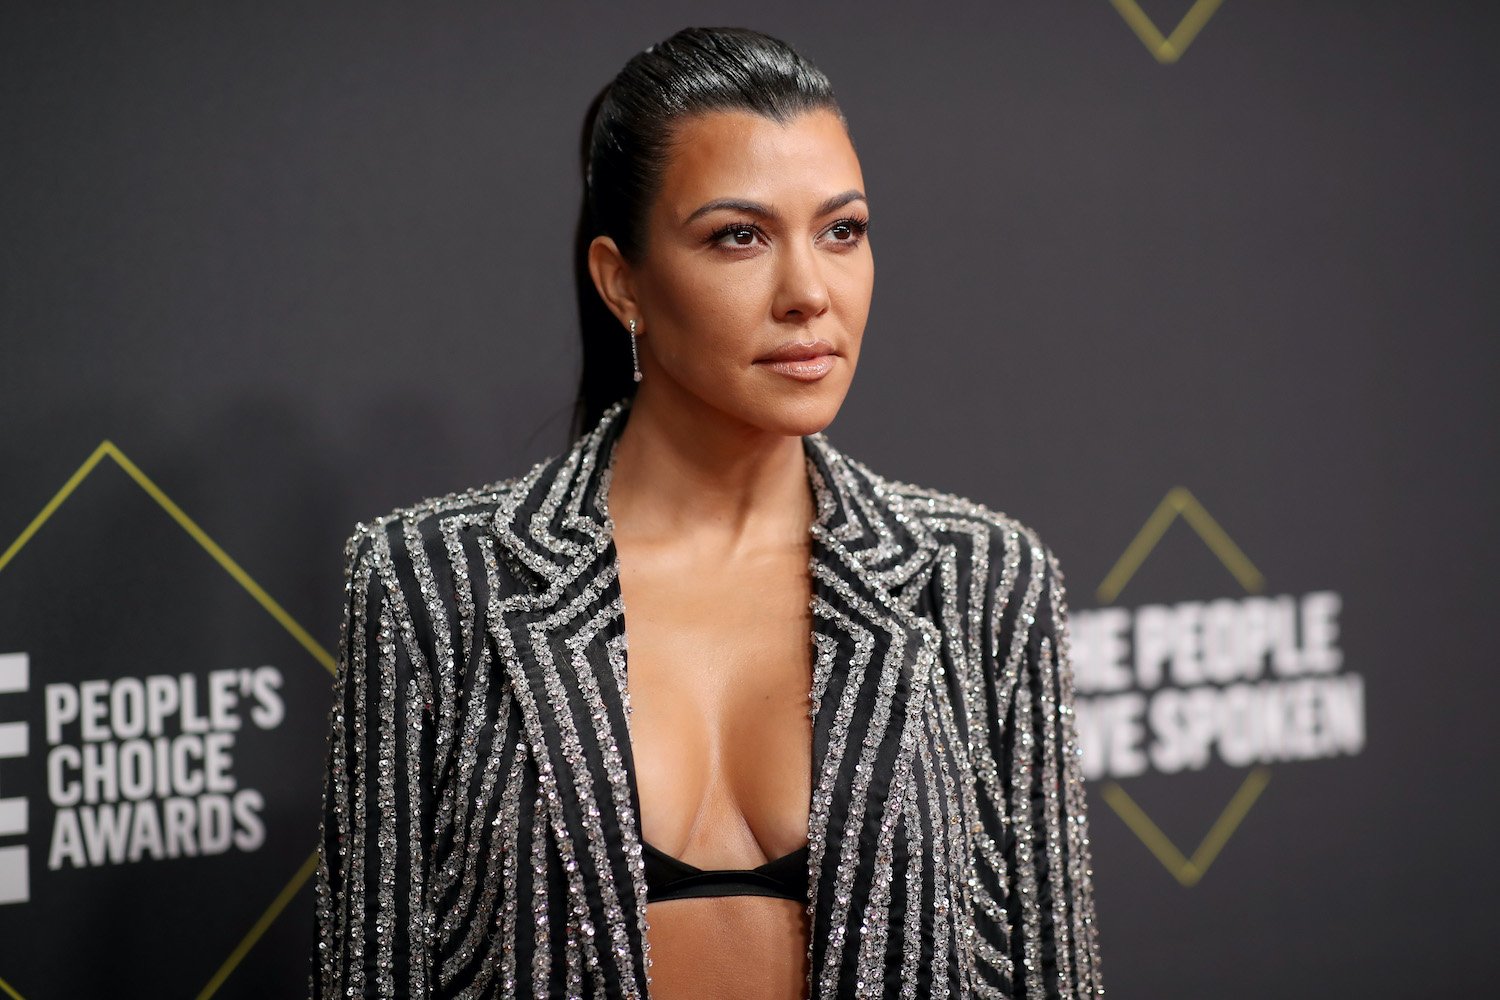 Kourtney Kardashian arrives to the 2019 E! People's Choice Awards